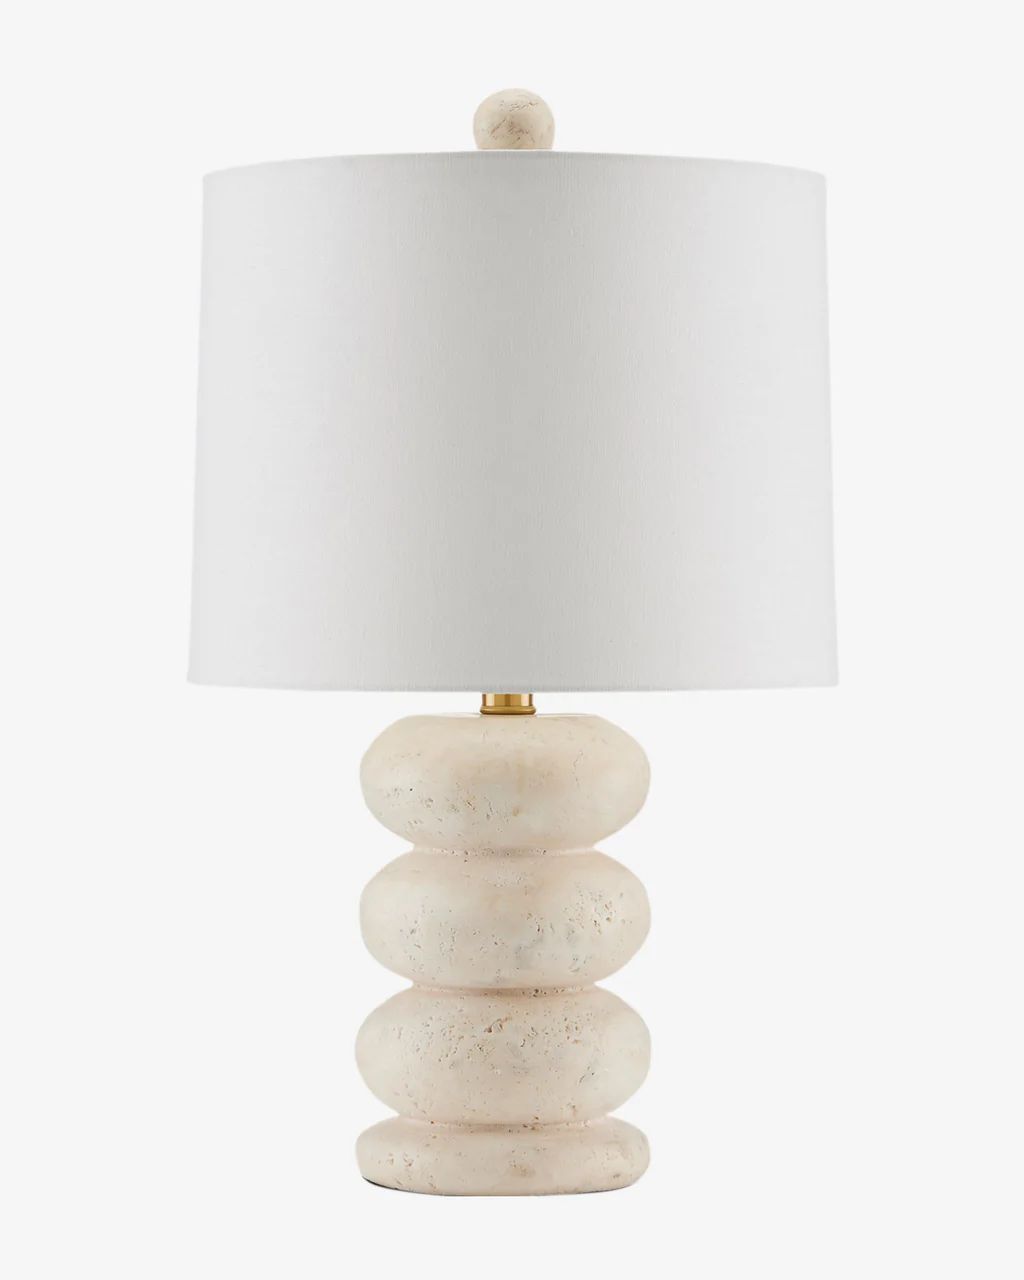 Girault Table Lamp | McGee & Co.